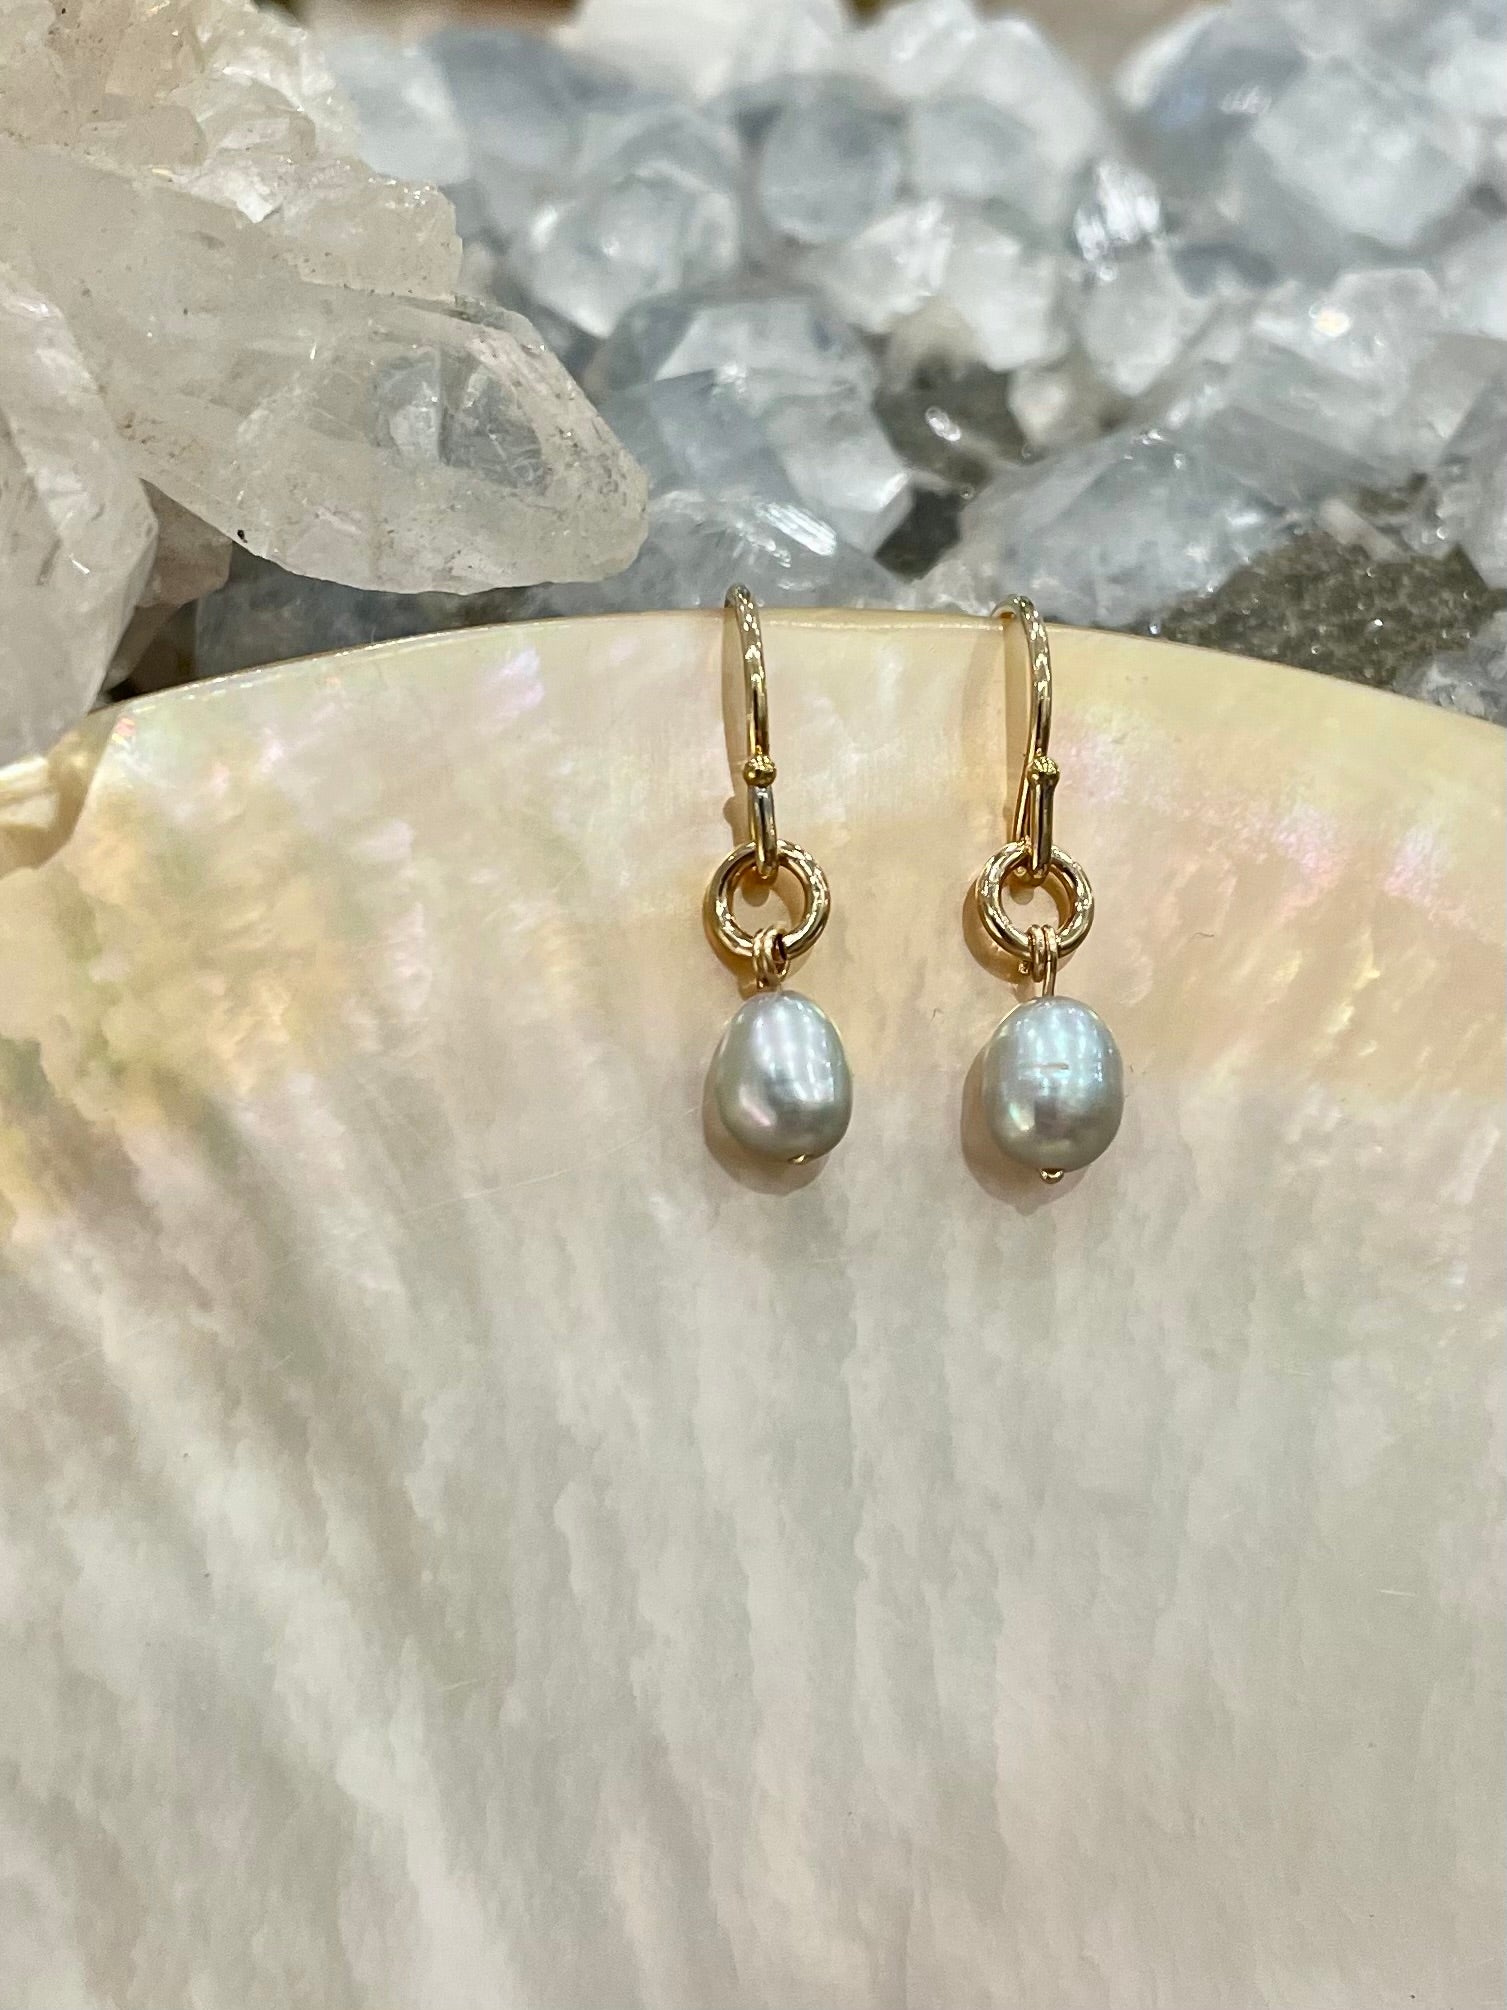 Mini gemstone hook earrings, blue pearl earrings, icy blue freshwater pearl earrings in gold